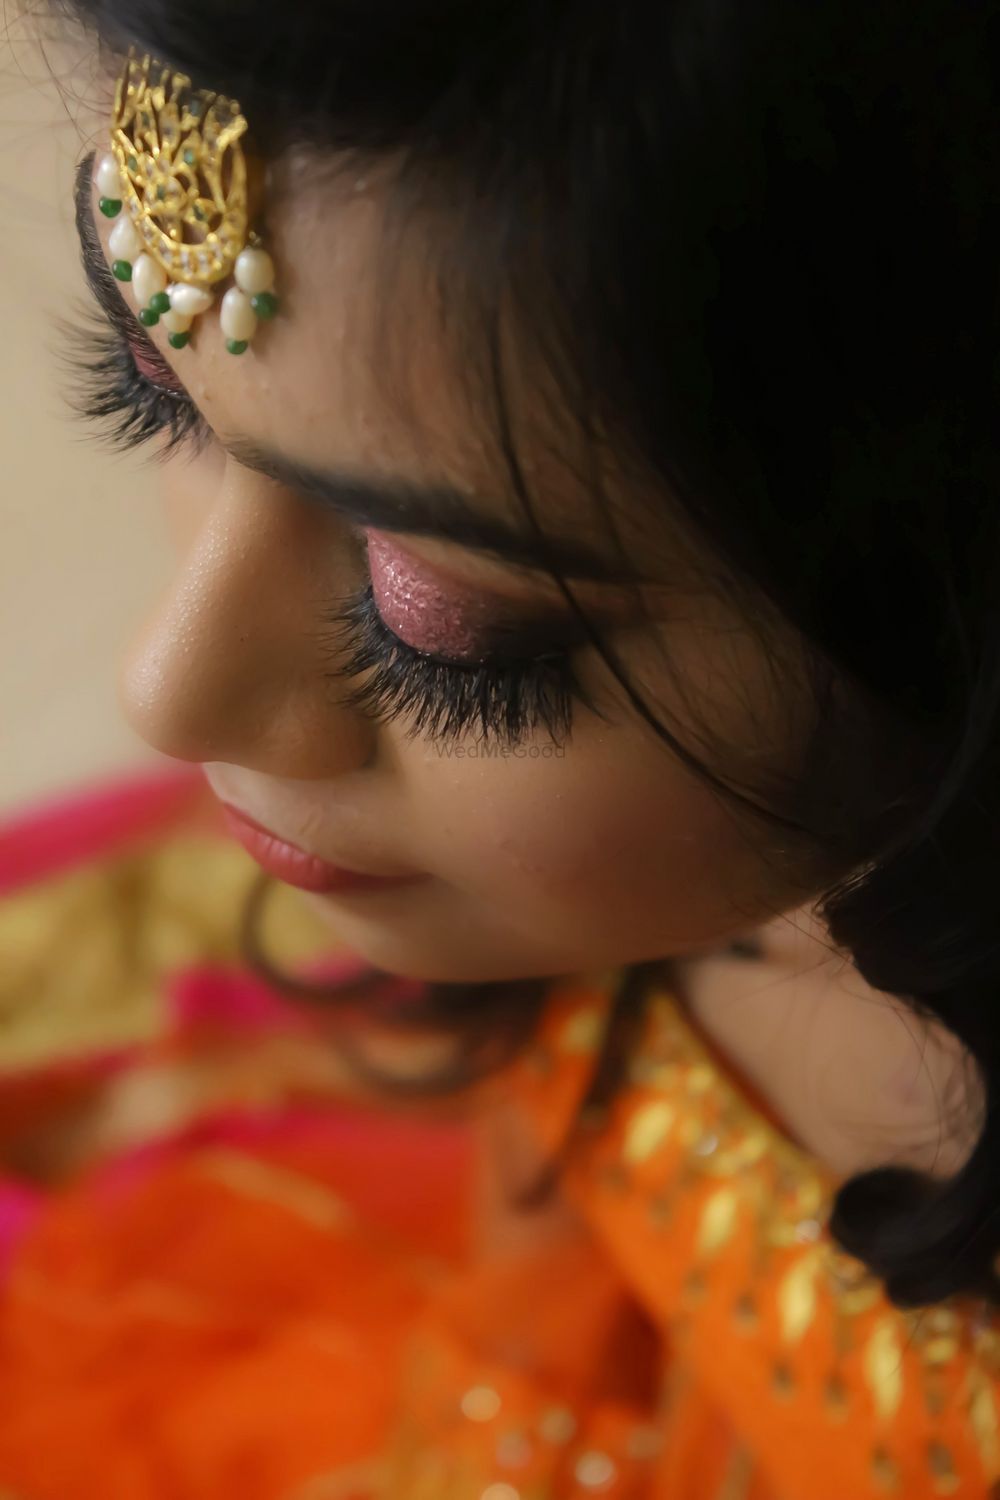 Photo By Makeup by Sunaila Ali - Bridal Makeup